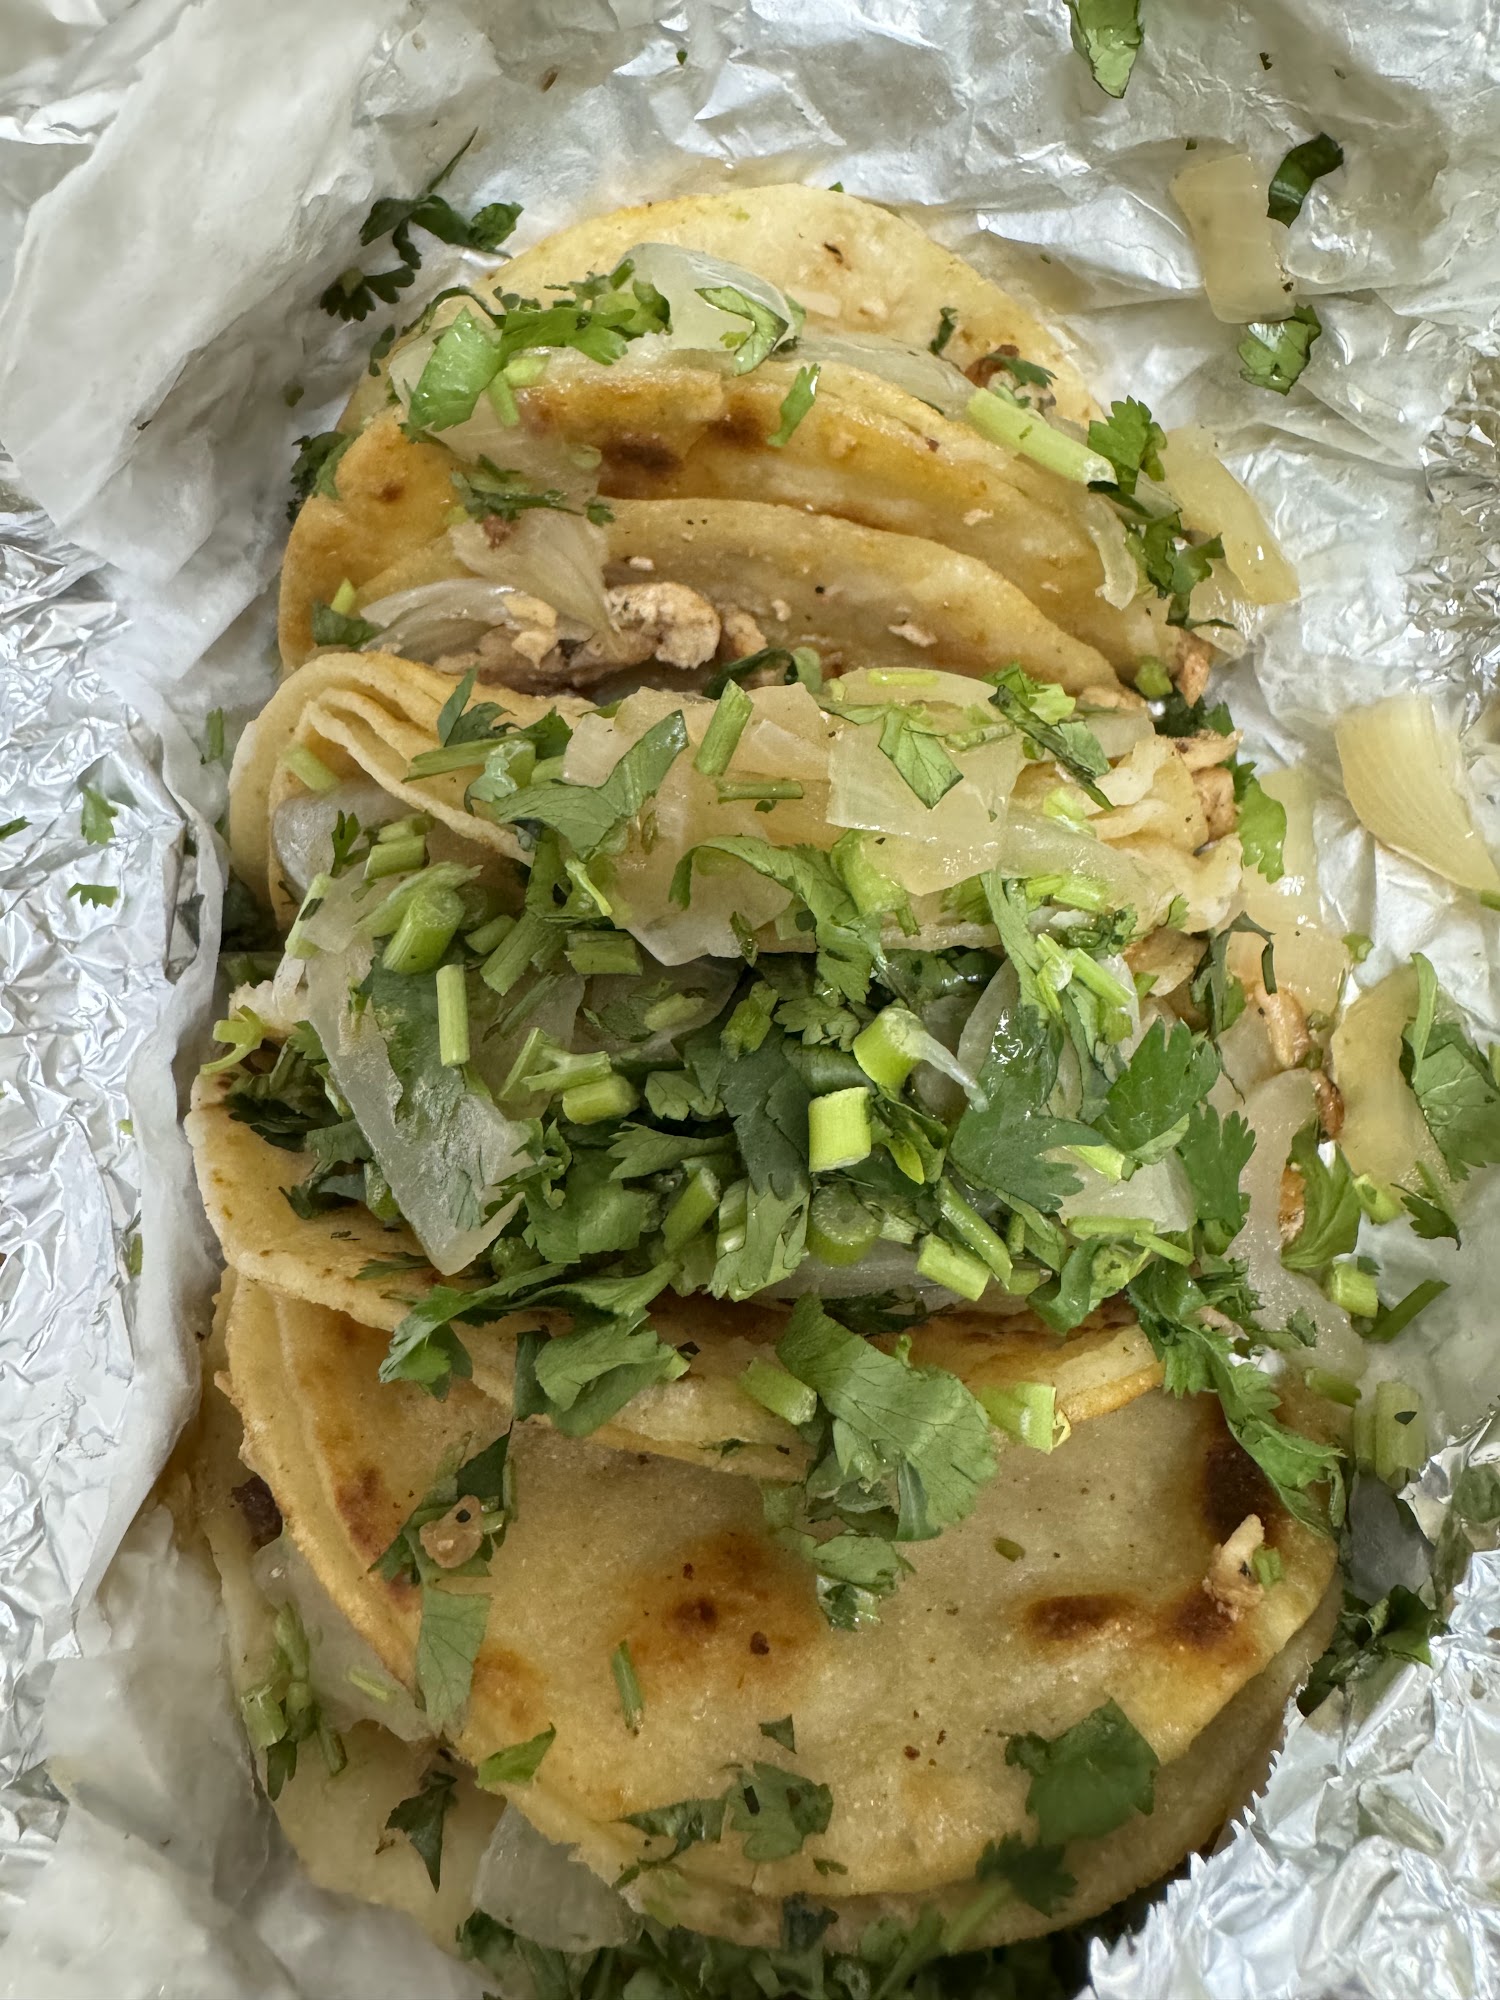 Tacos Laguna (Food Truck)